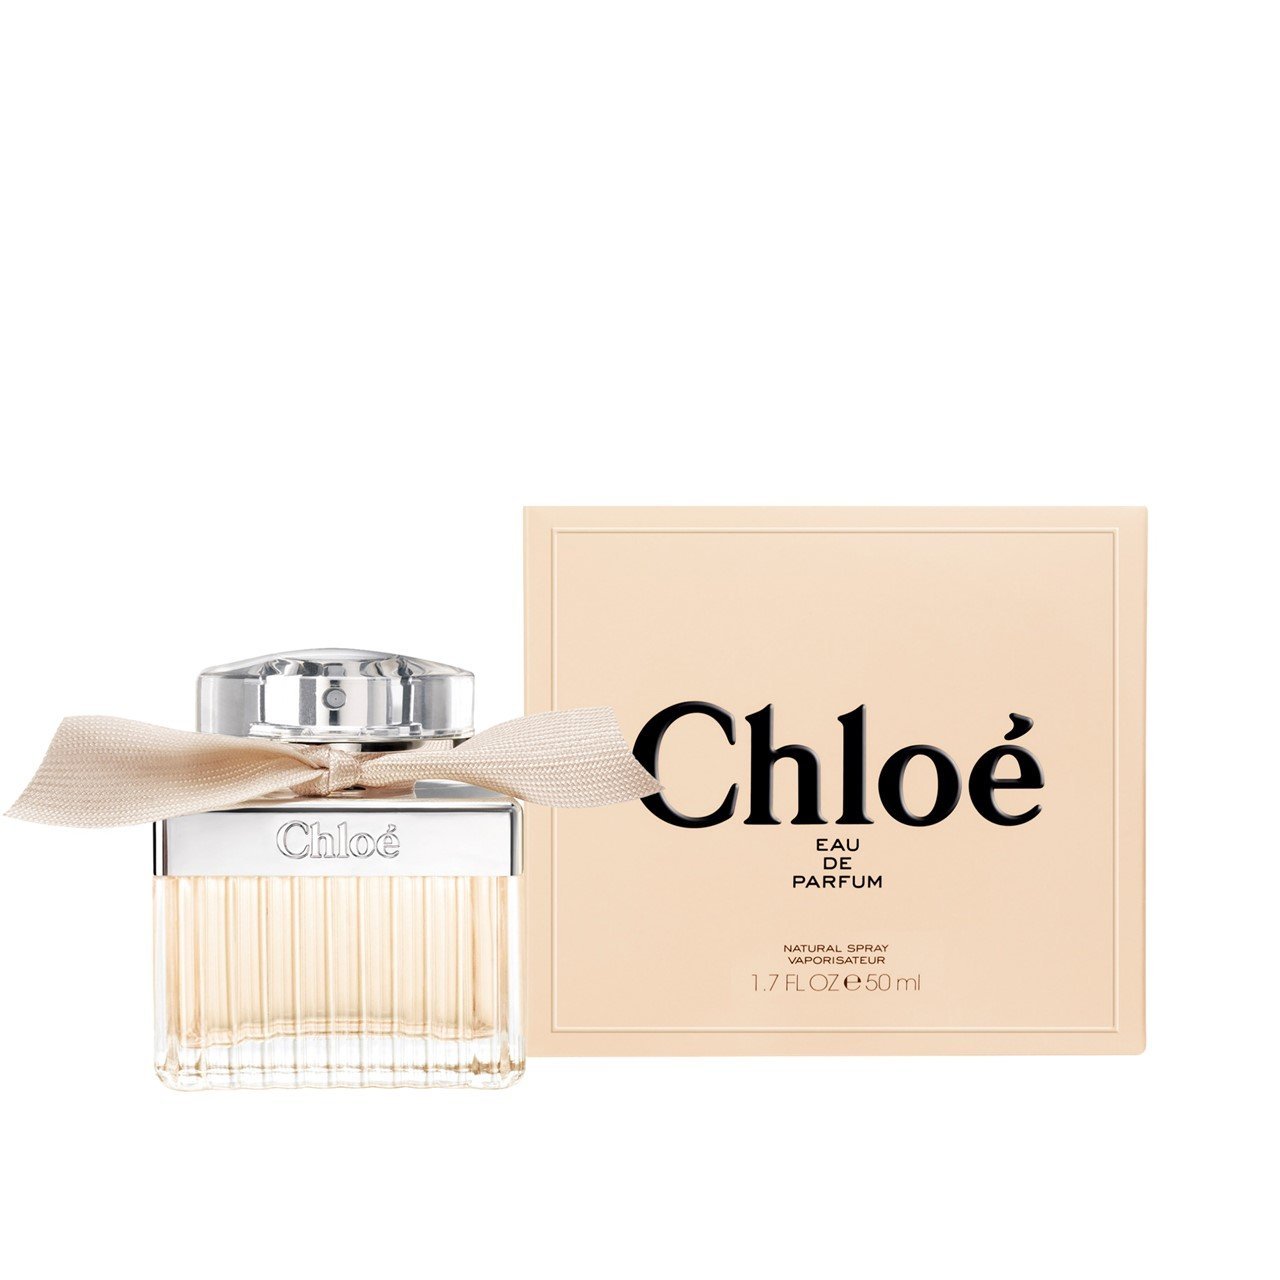 CHLOE Eau de Parfum 75ml